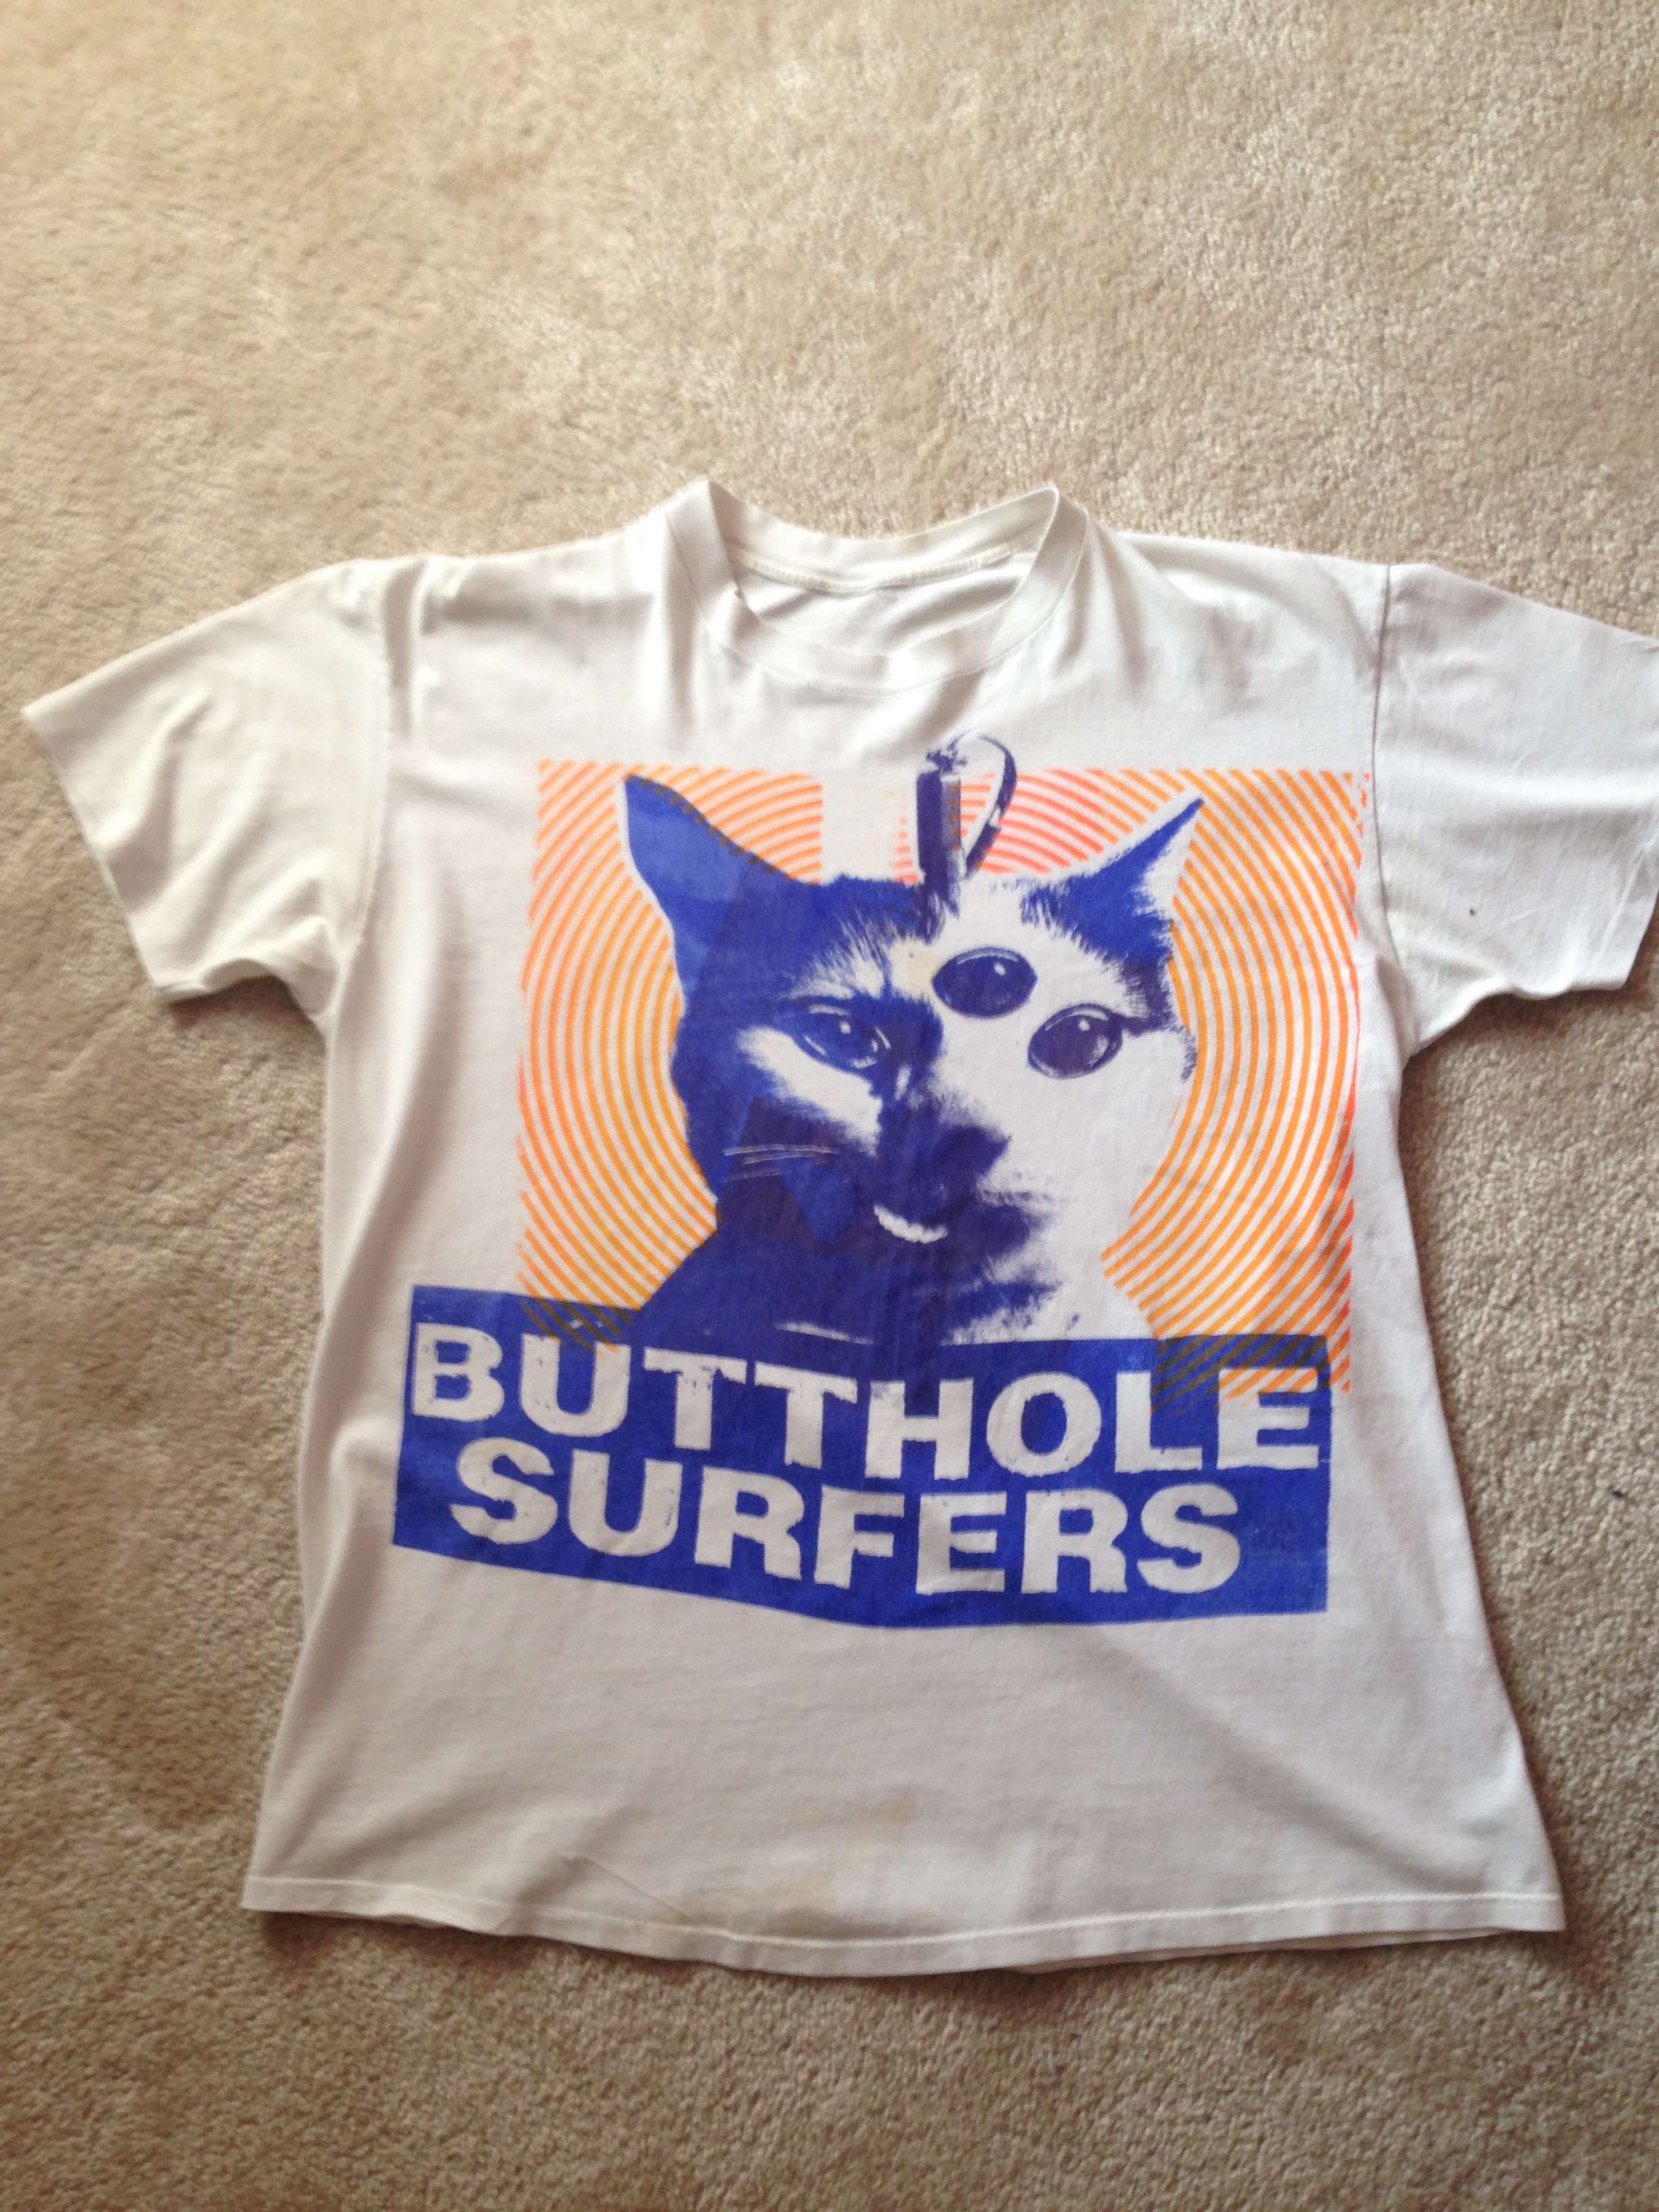 Butthole Surfers Tshirt: 3 Eyed Cat - Vintage T-Shirt Forum